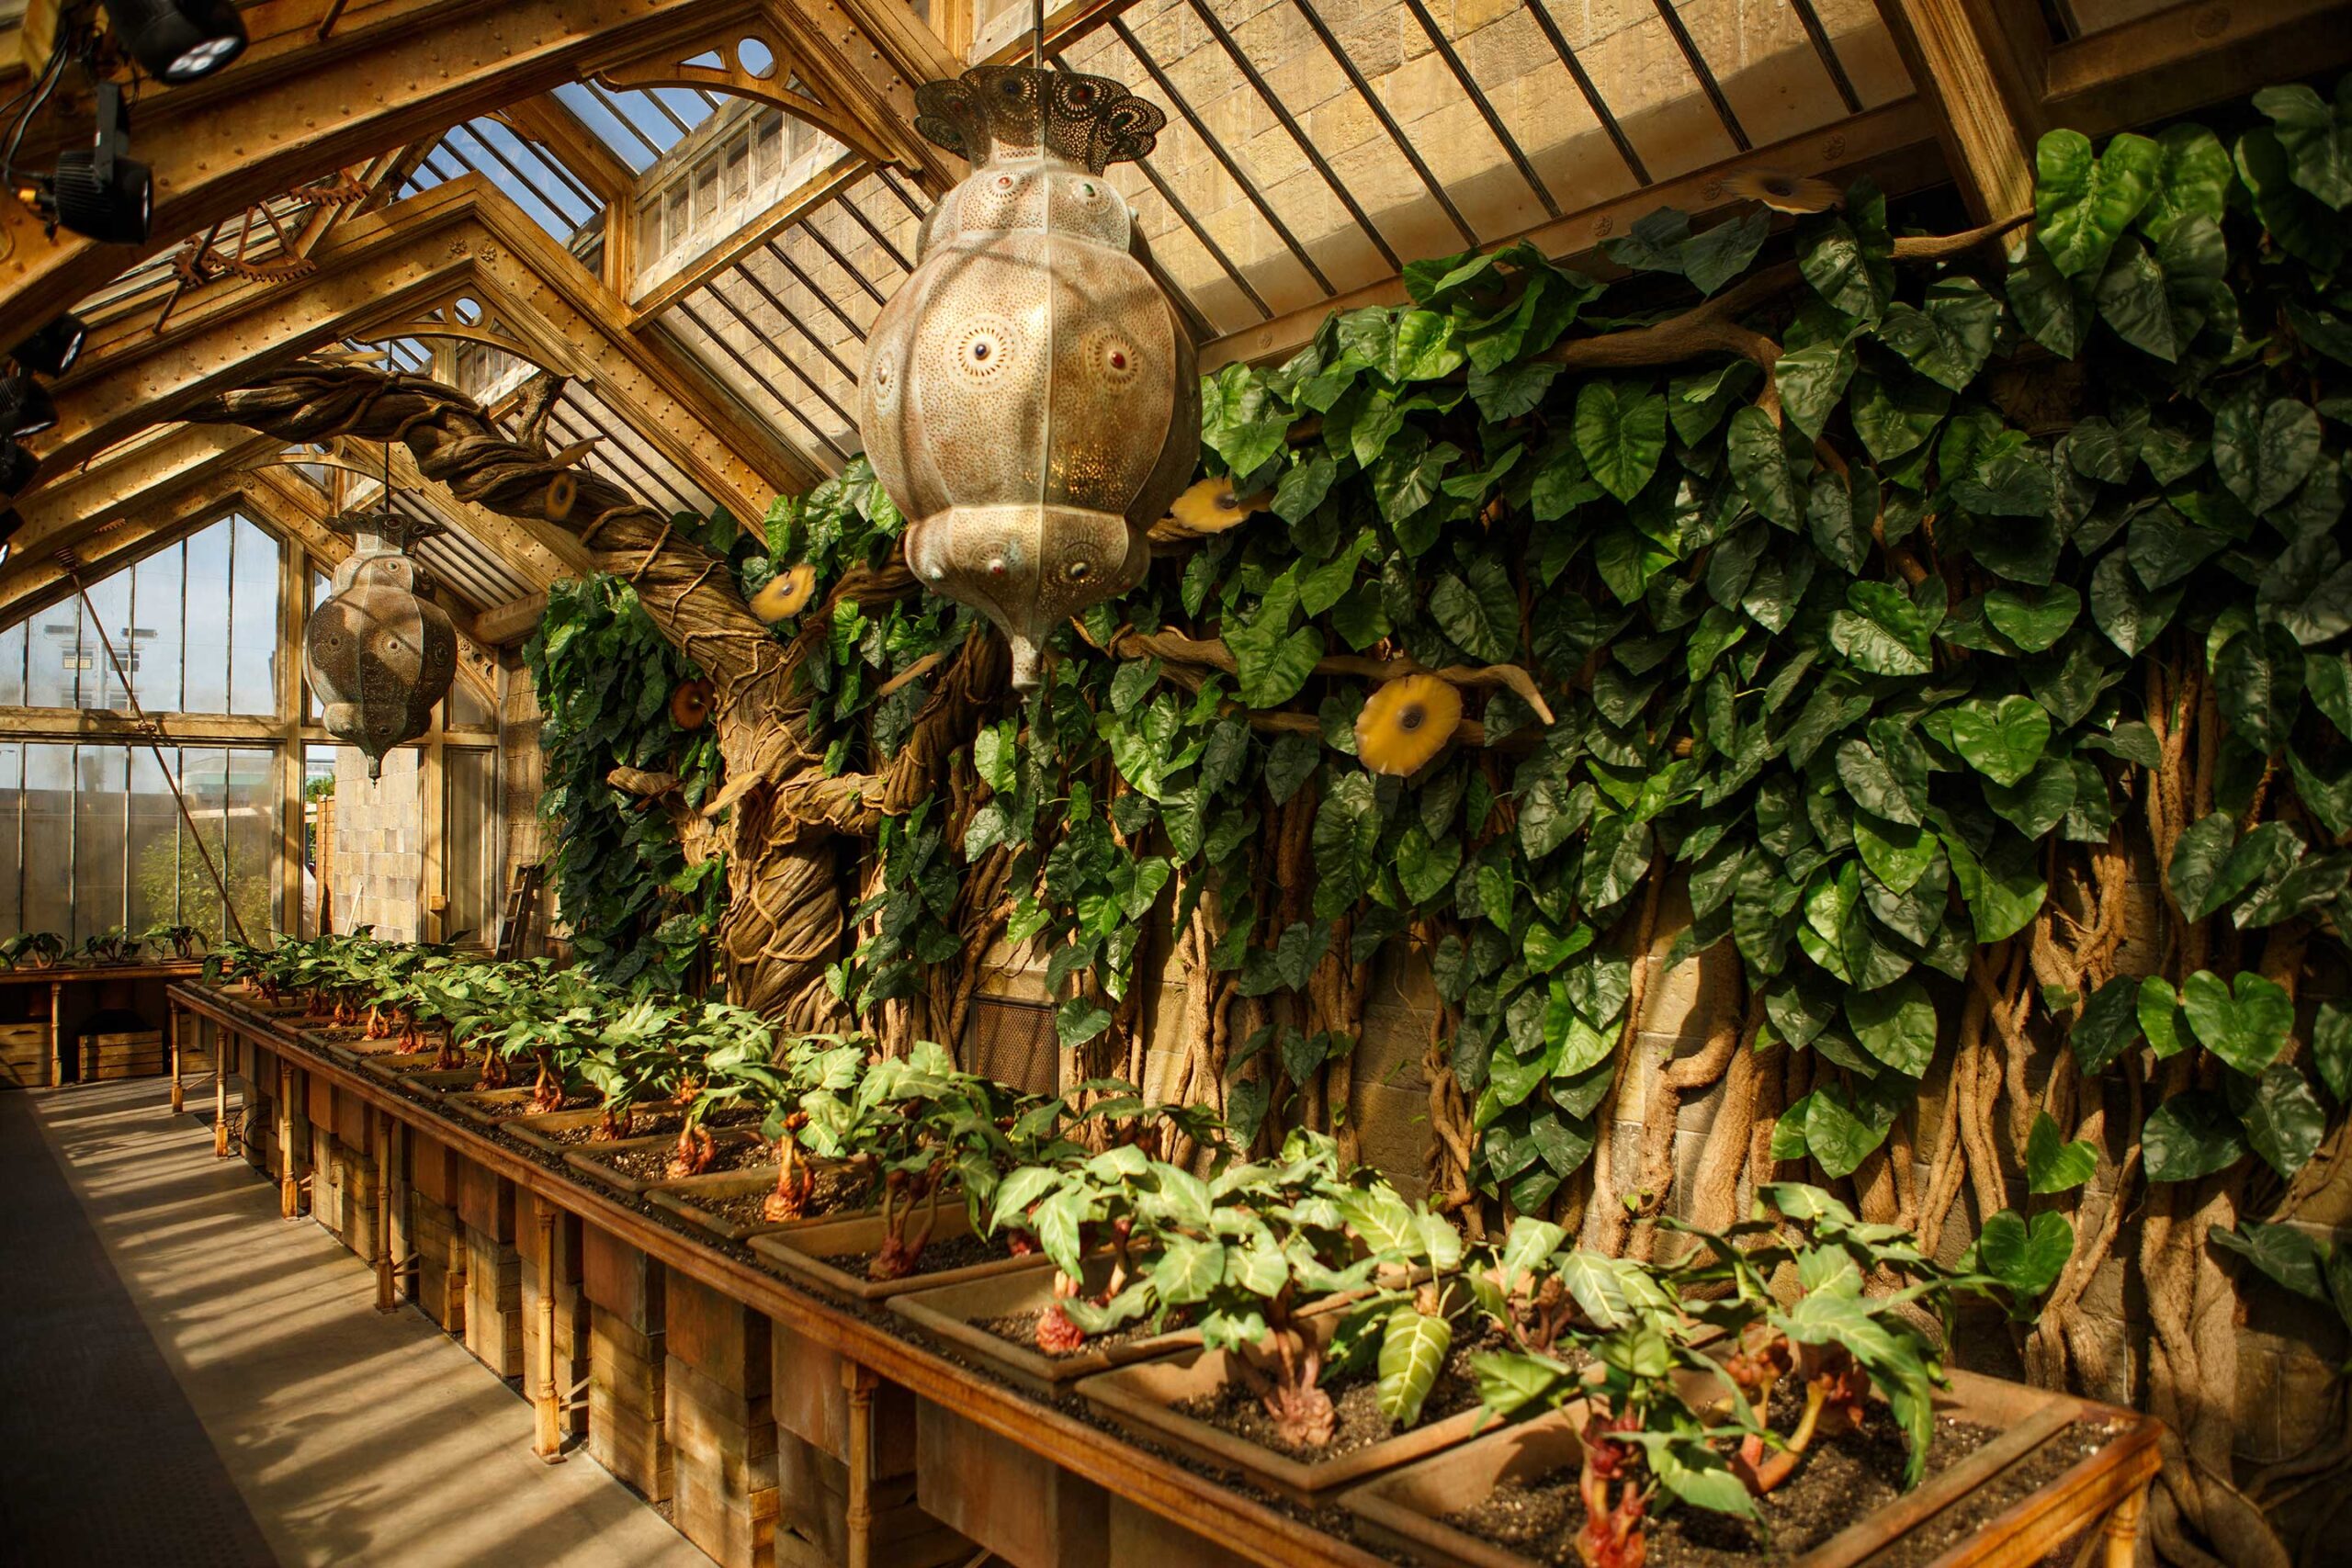 Professor Sprout's greenhouse at Warner Bros. Studio Tour London